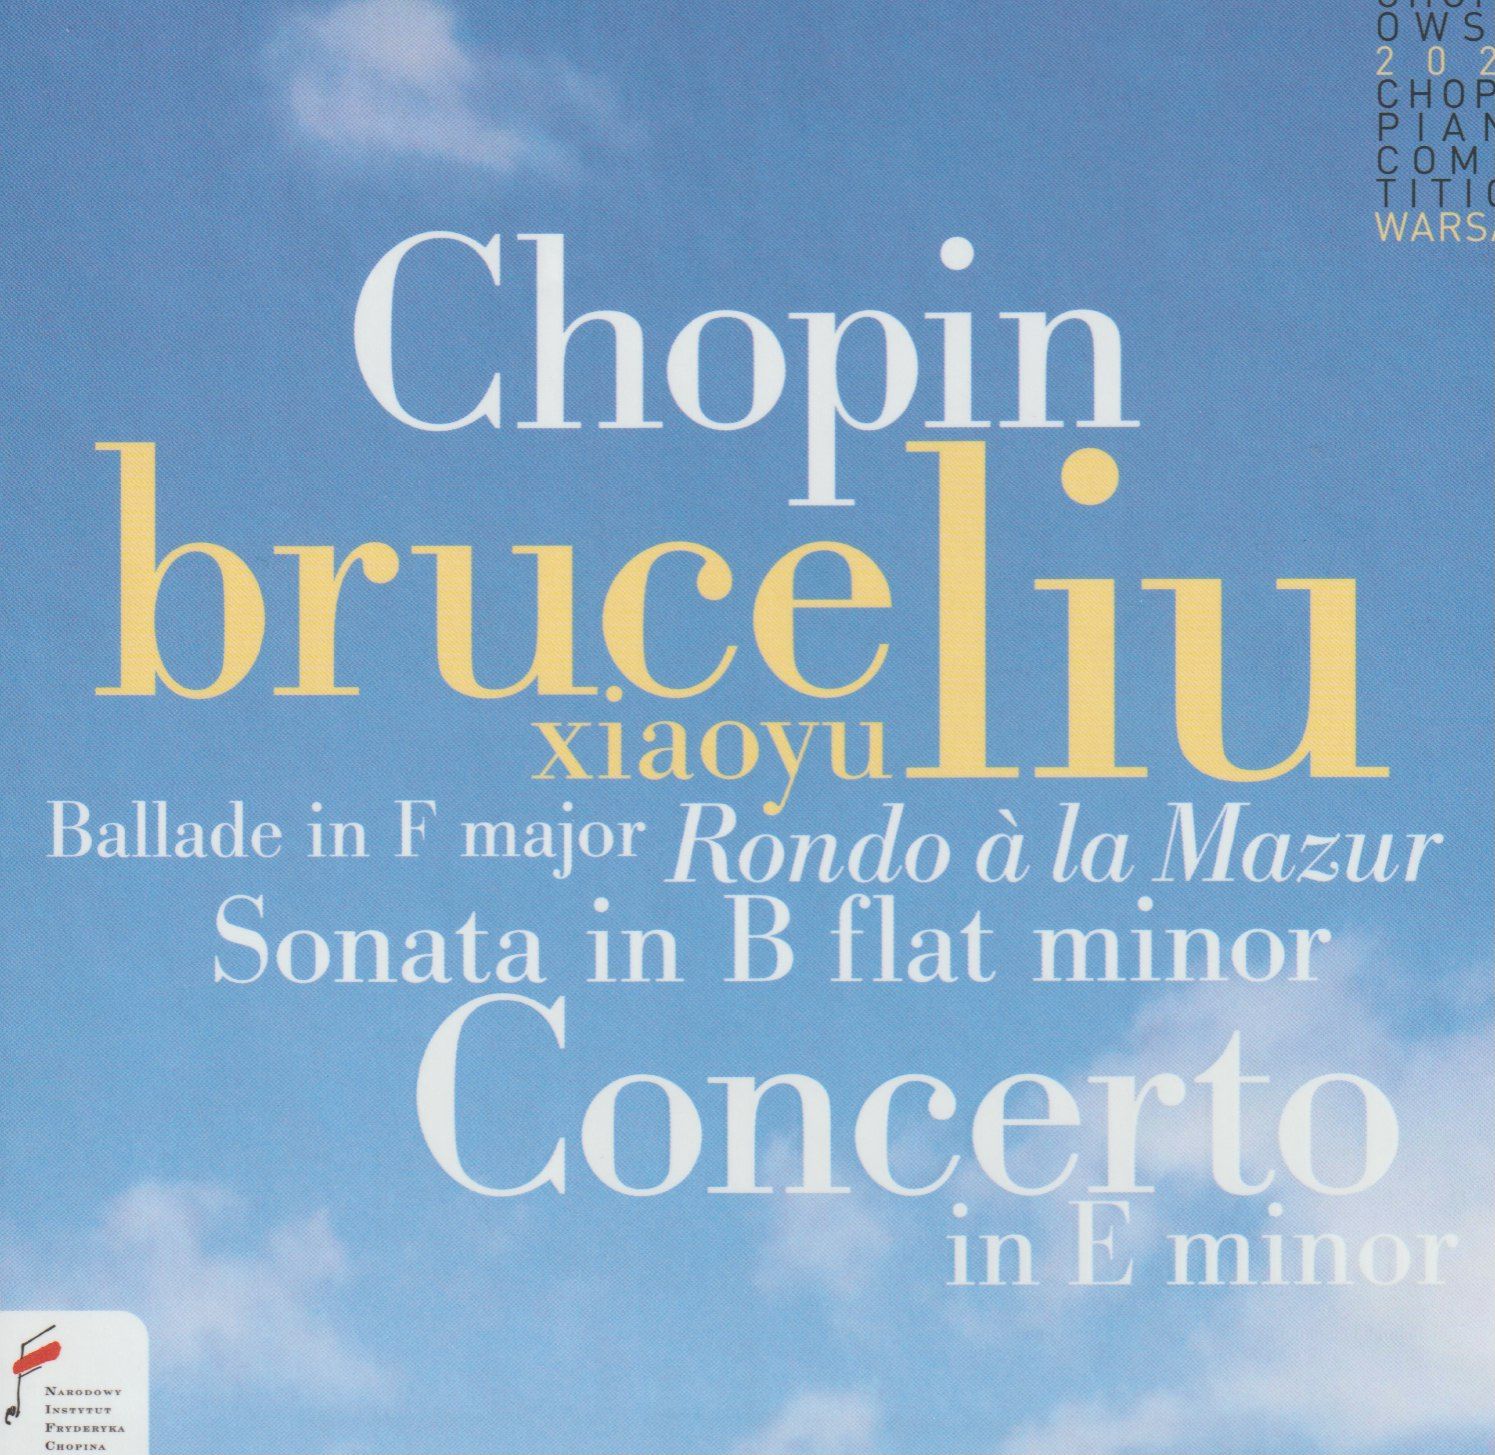 Filling out Bruce Liu's Chopin journey